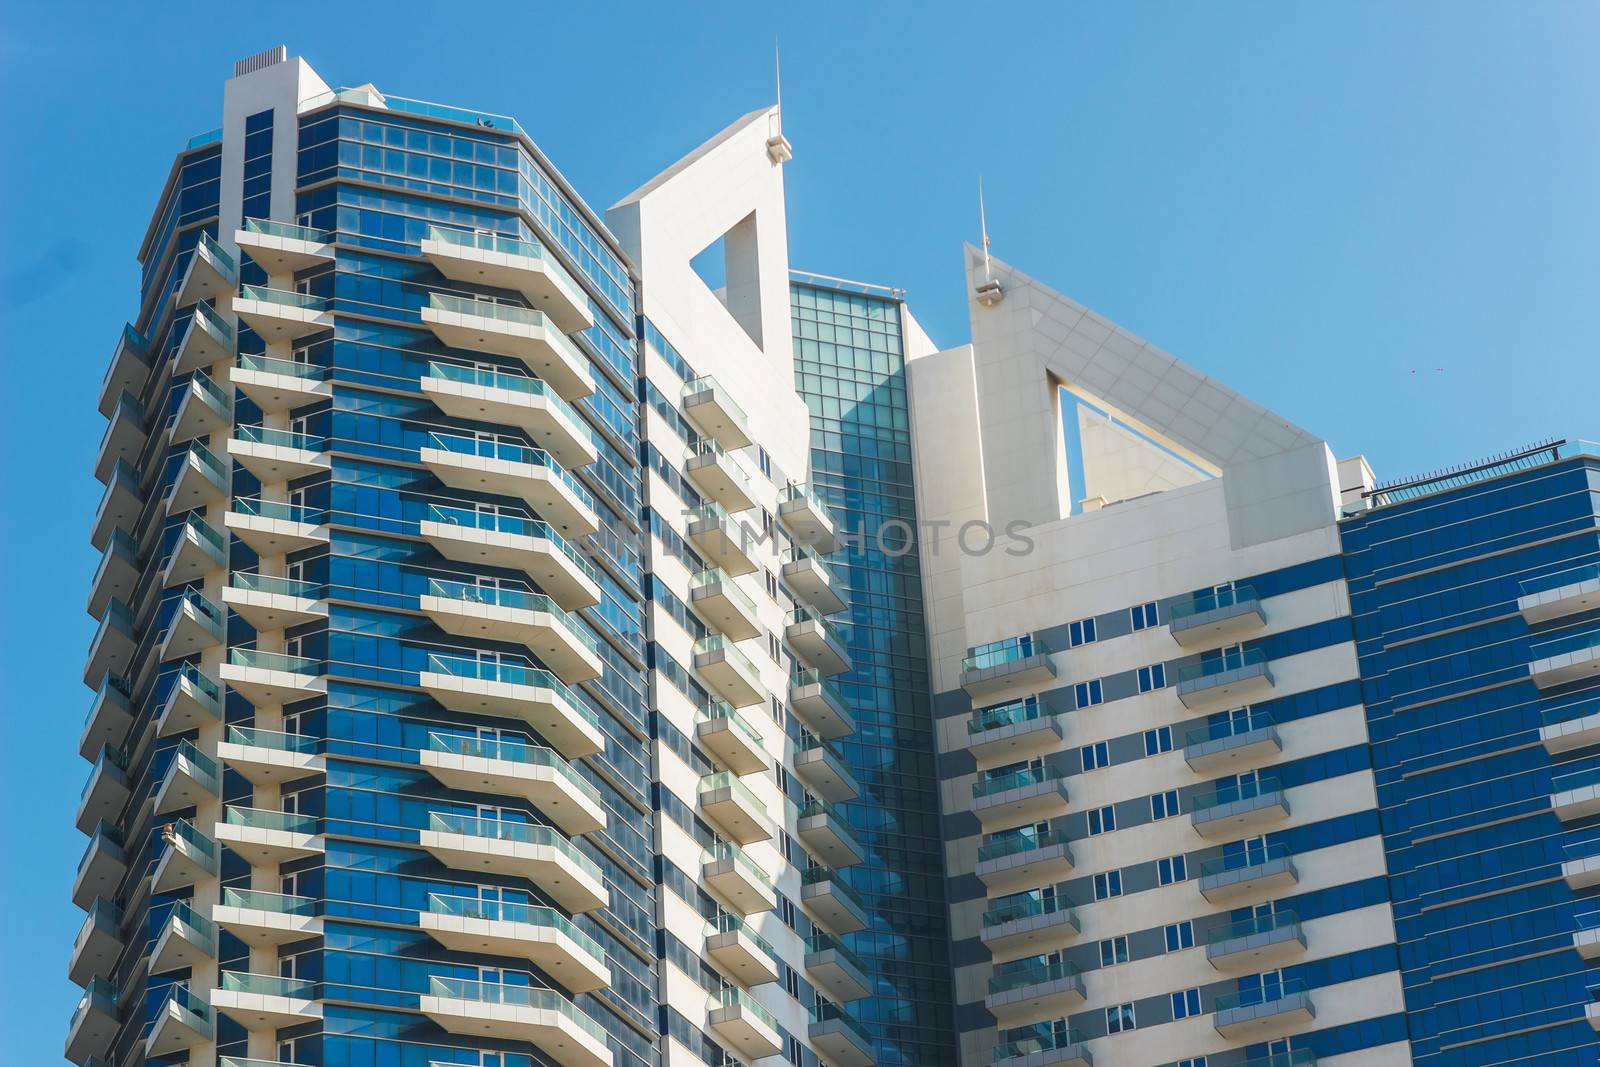 High rise buildings and streets in Dubai, UAE by oleg_zhukov